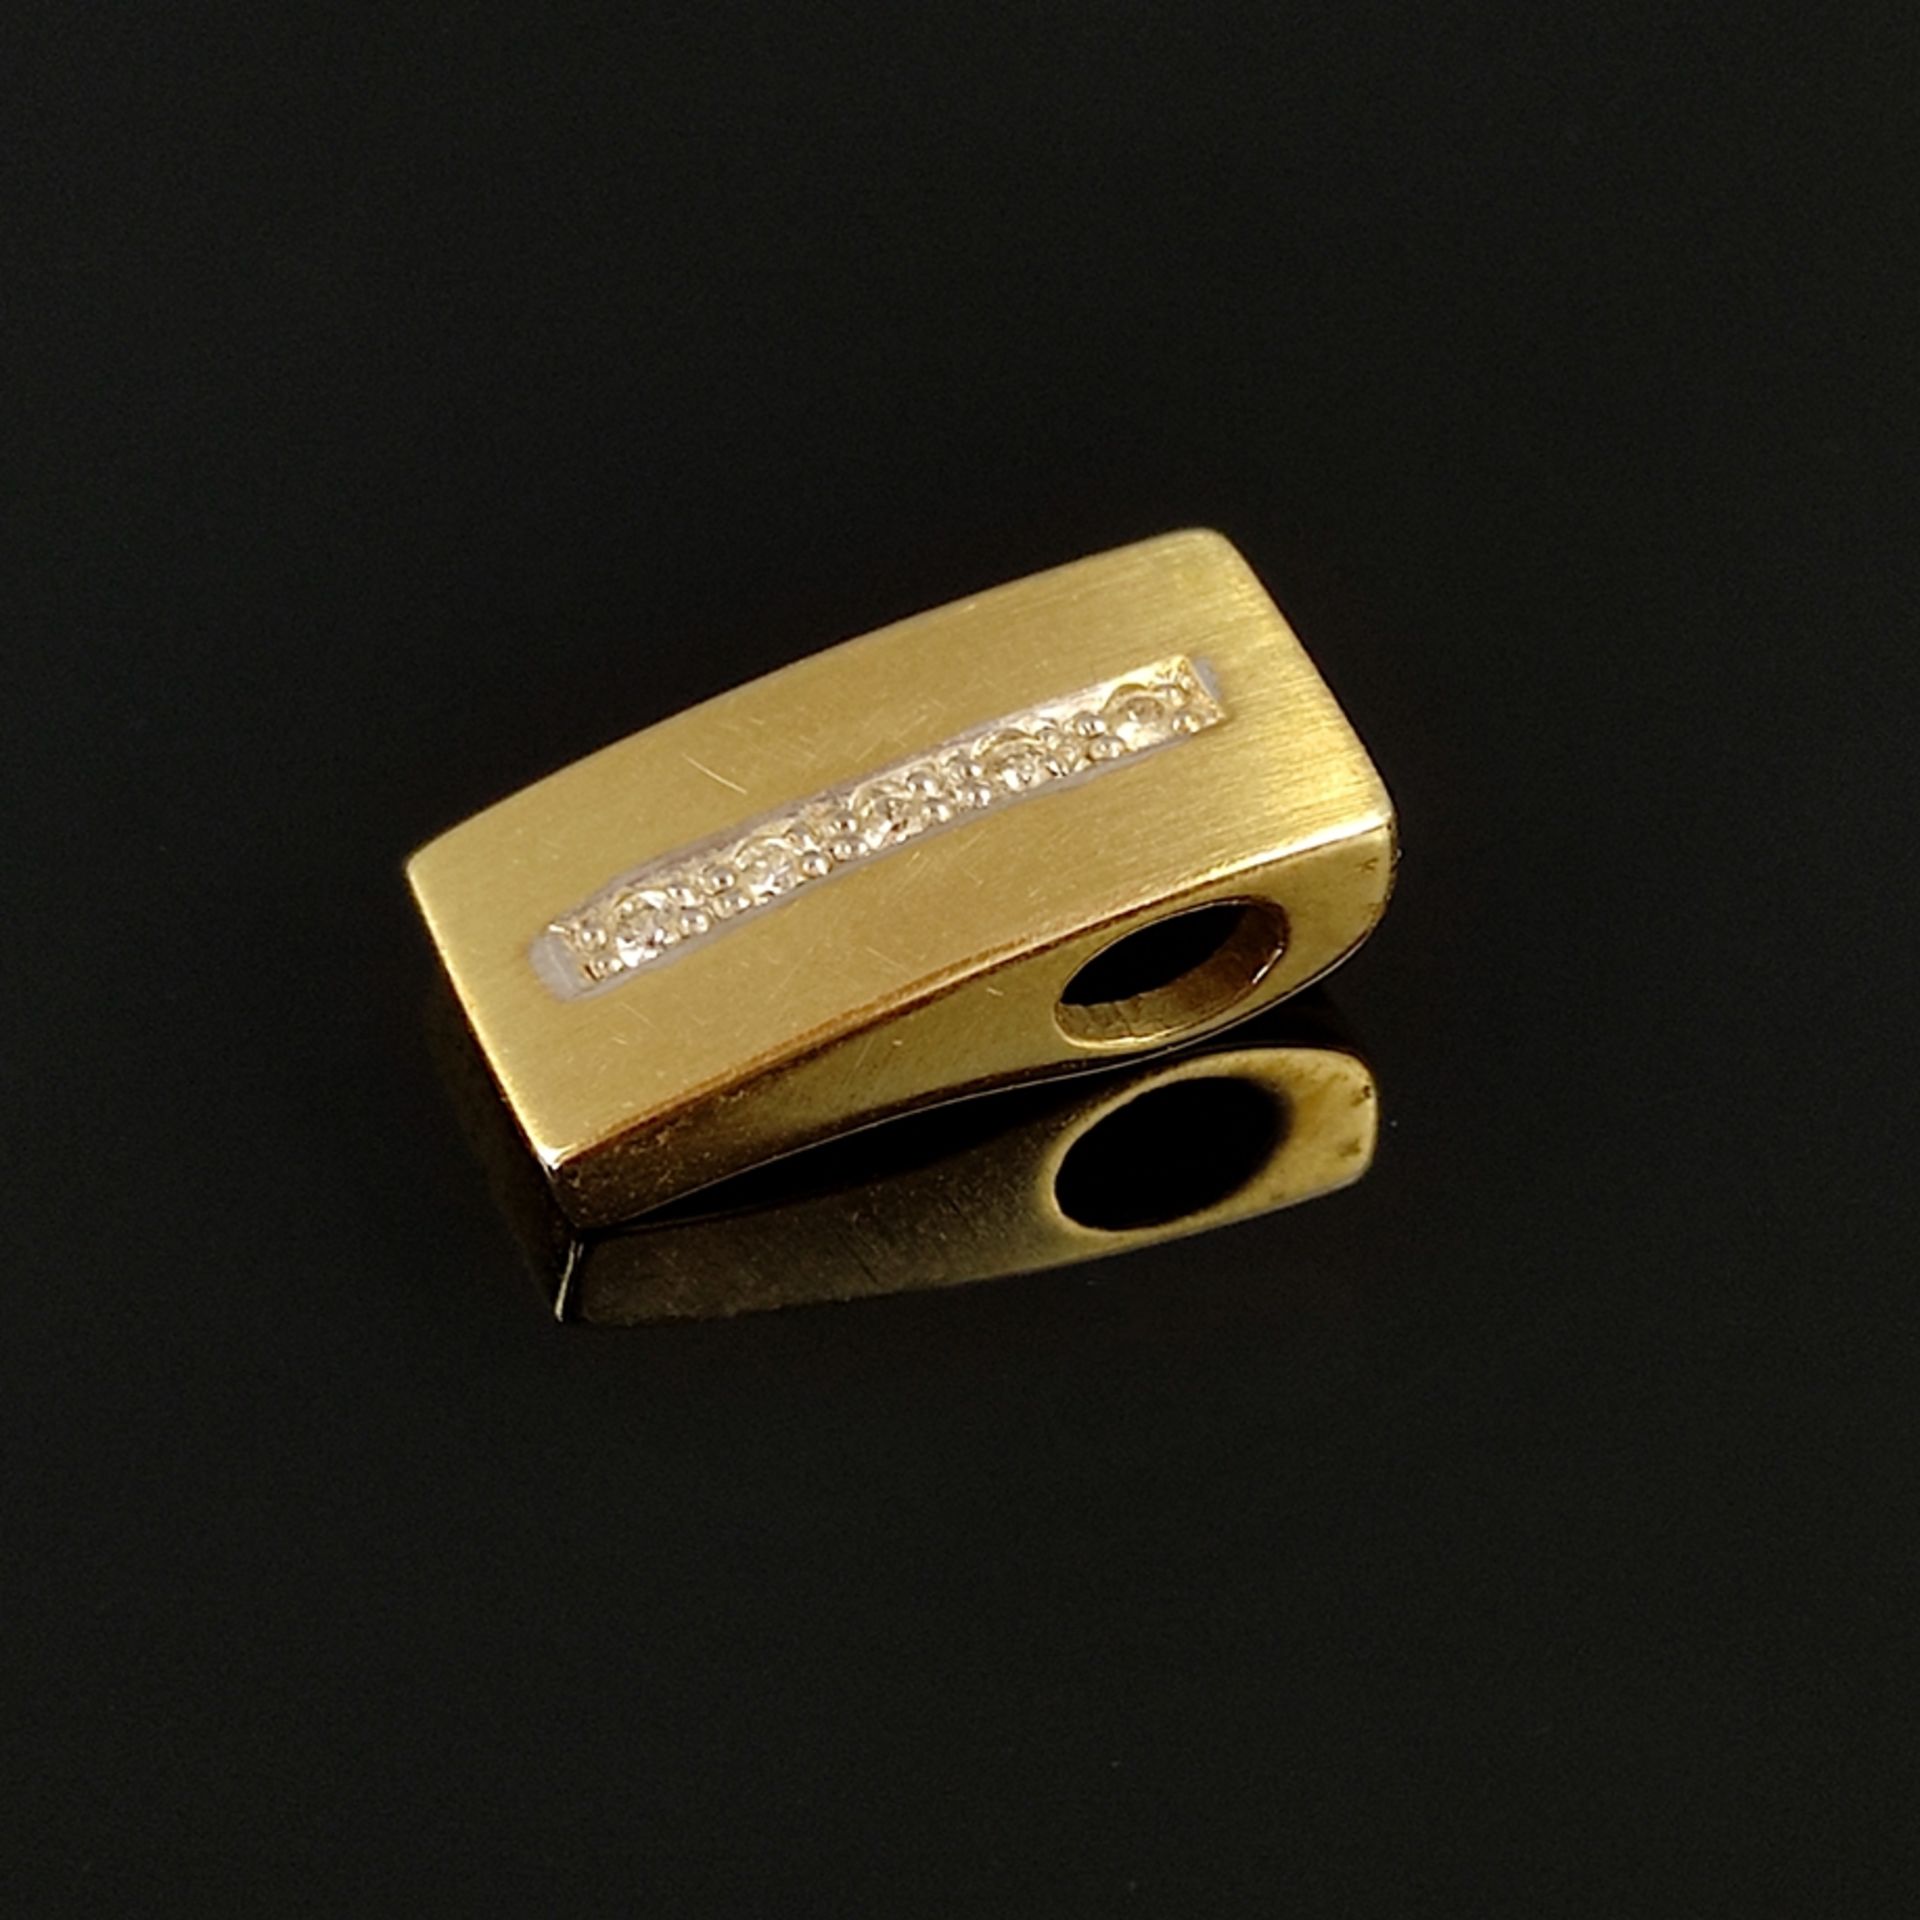 Modern gold diamond pendant, 585/14K, 2,9g, set with 5 small diamonds, rhodium-plated settings, gol - Image 2 of 4